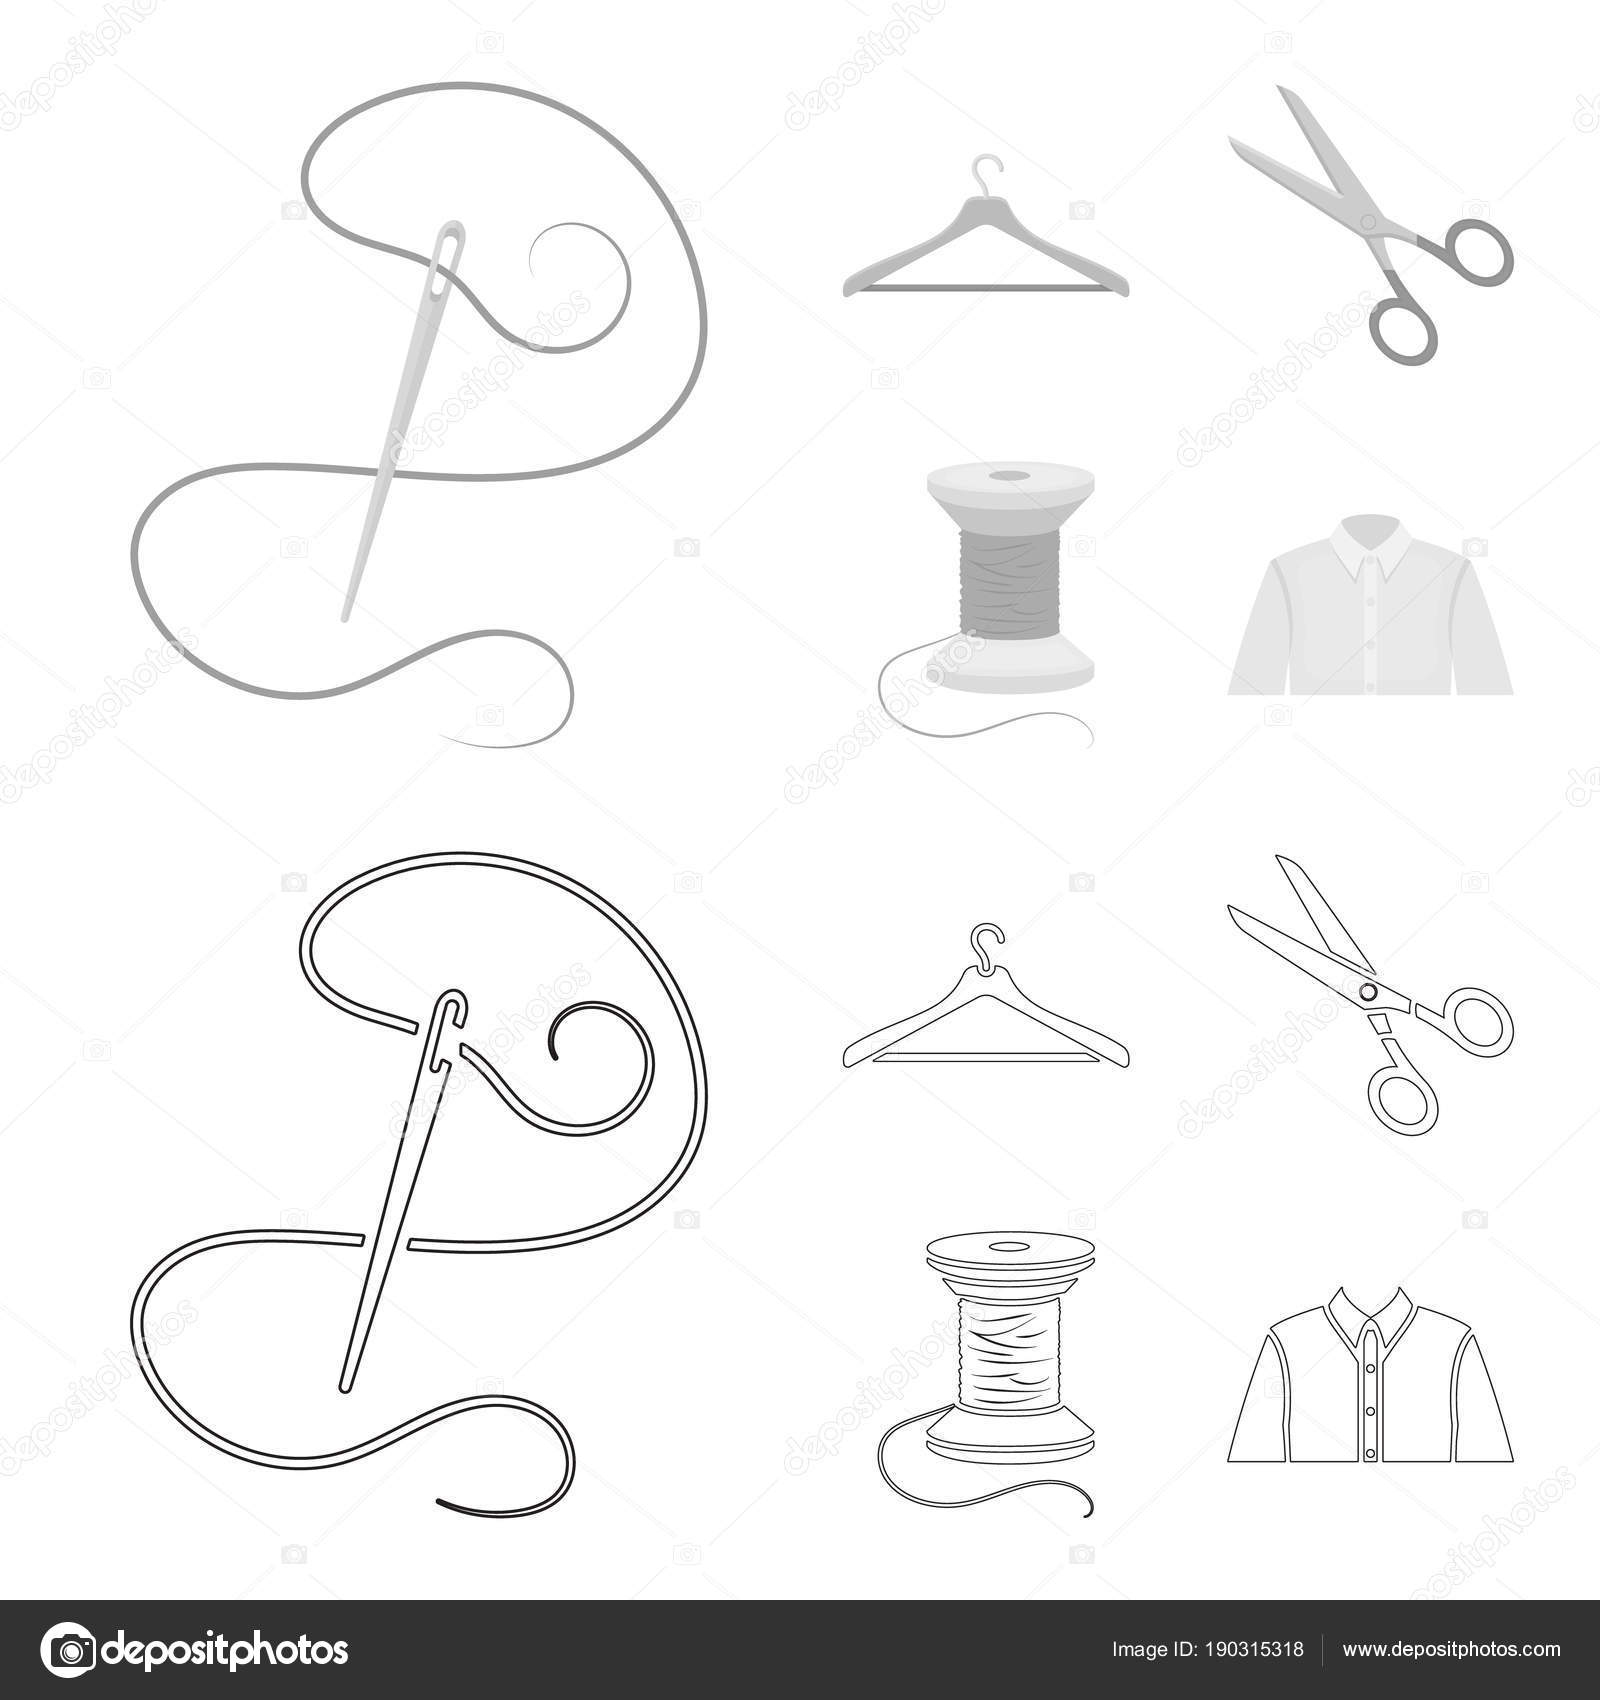 Thread, reel, hanger, needle, scissors.Atelier set collection